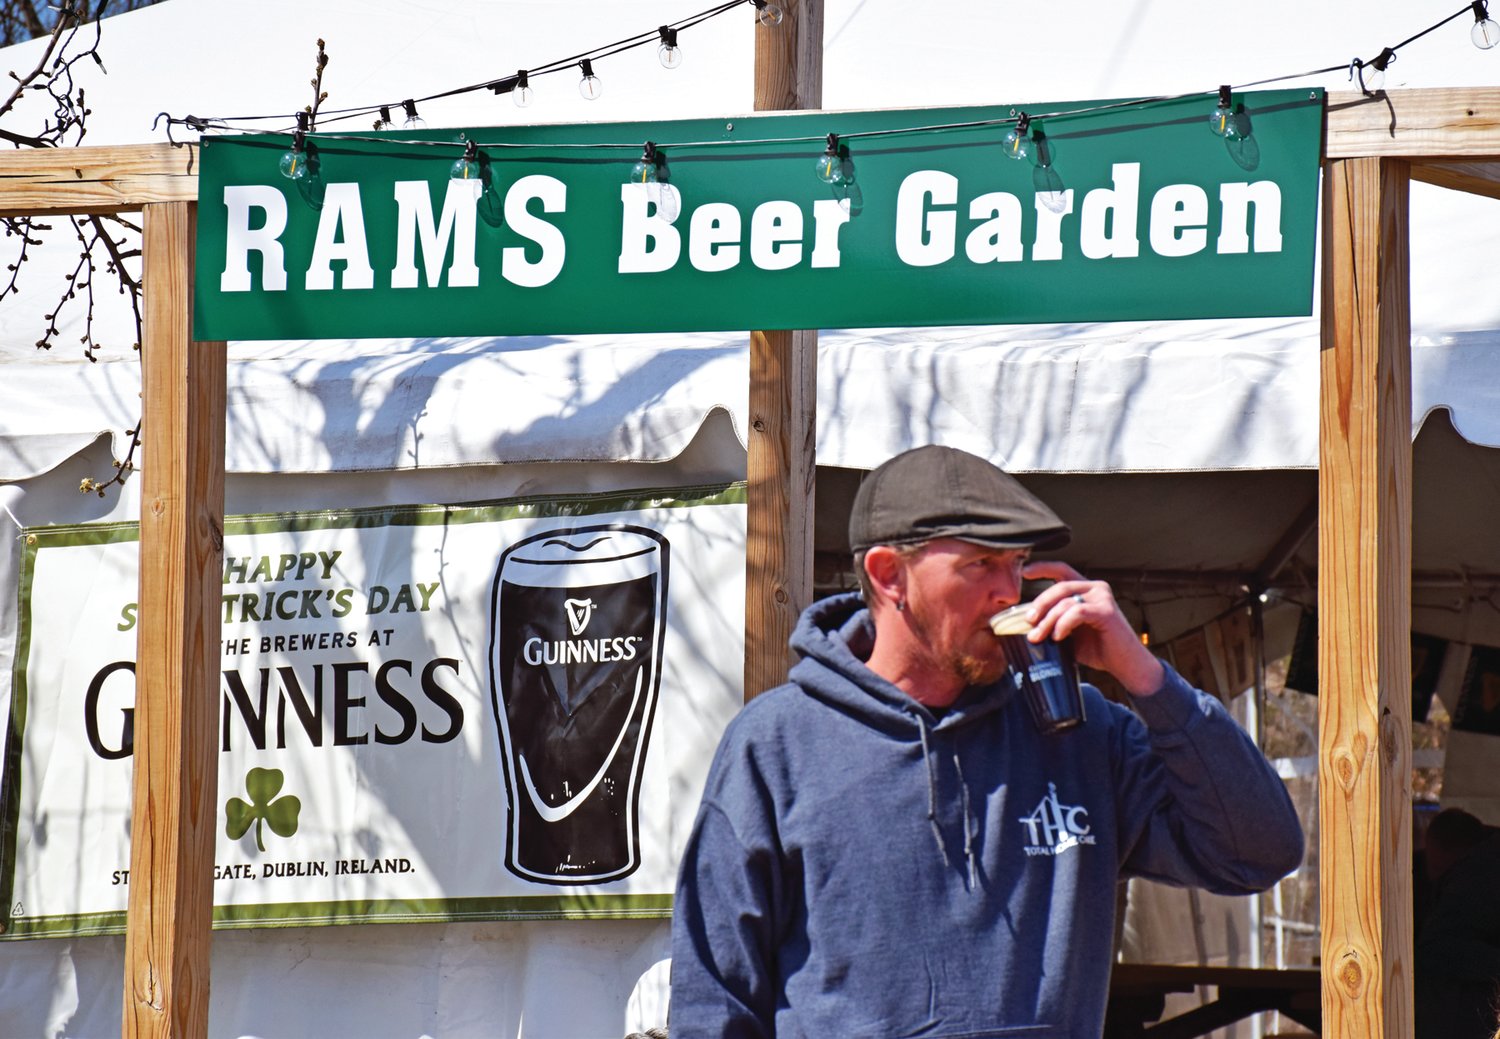 An Upper Bucks Celtic Festival attendee has a drink at the Rams Beer Garden.